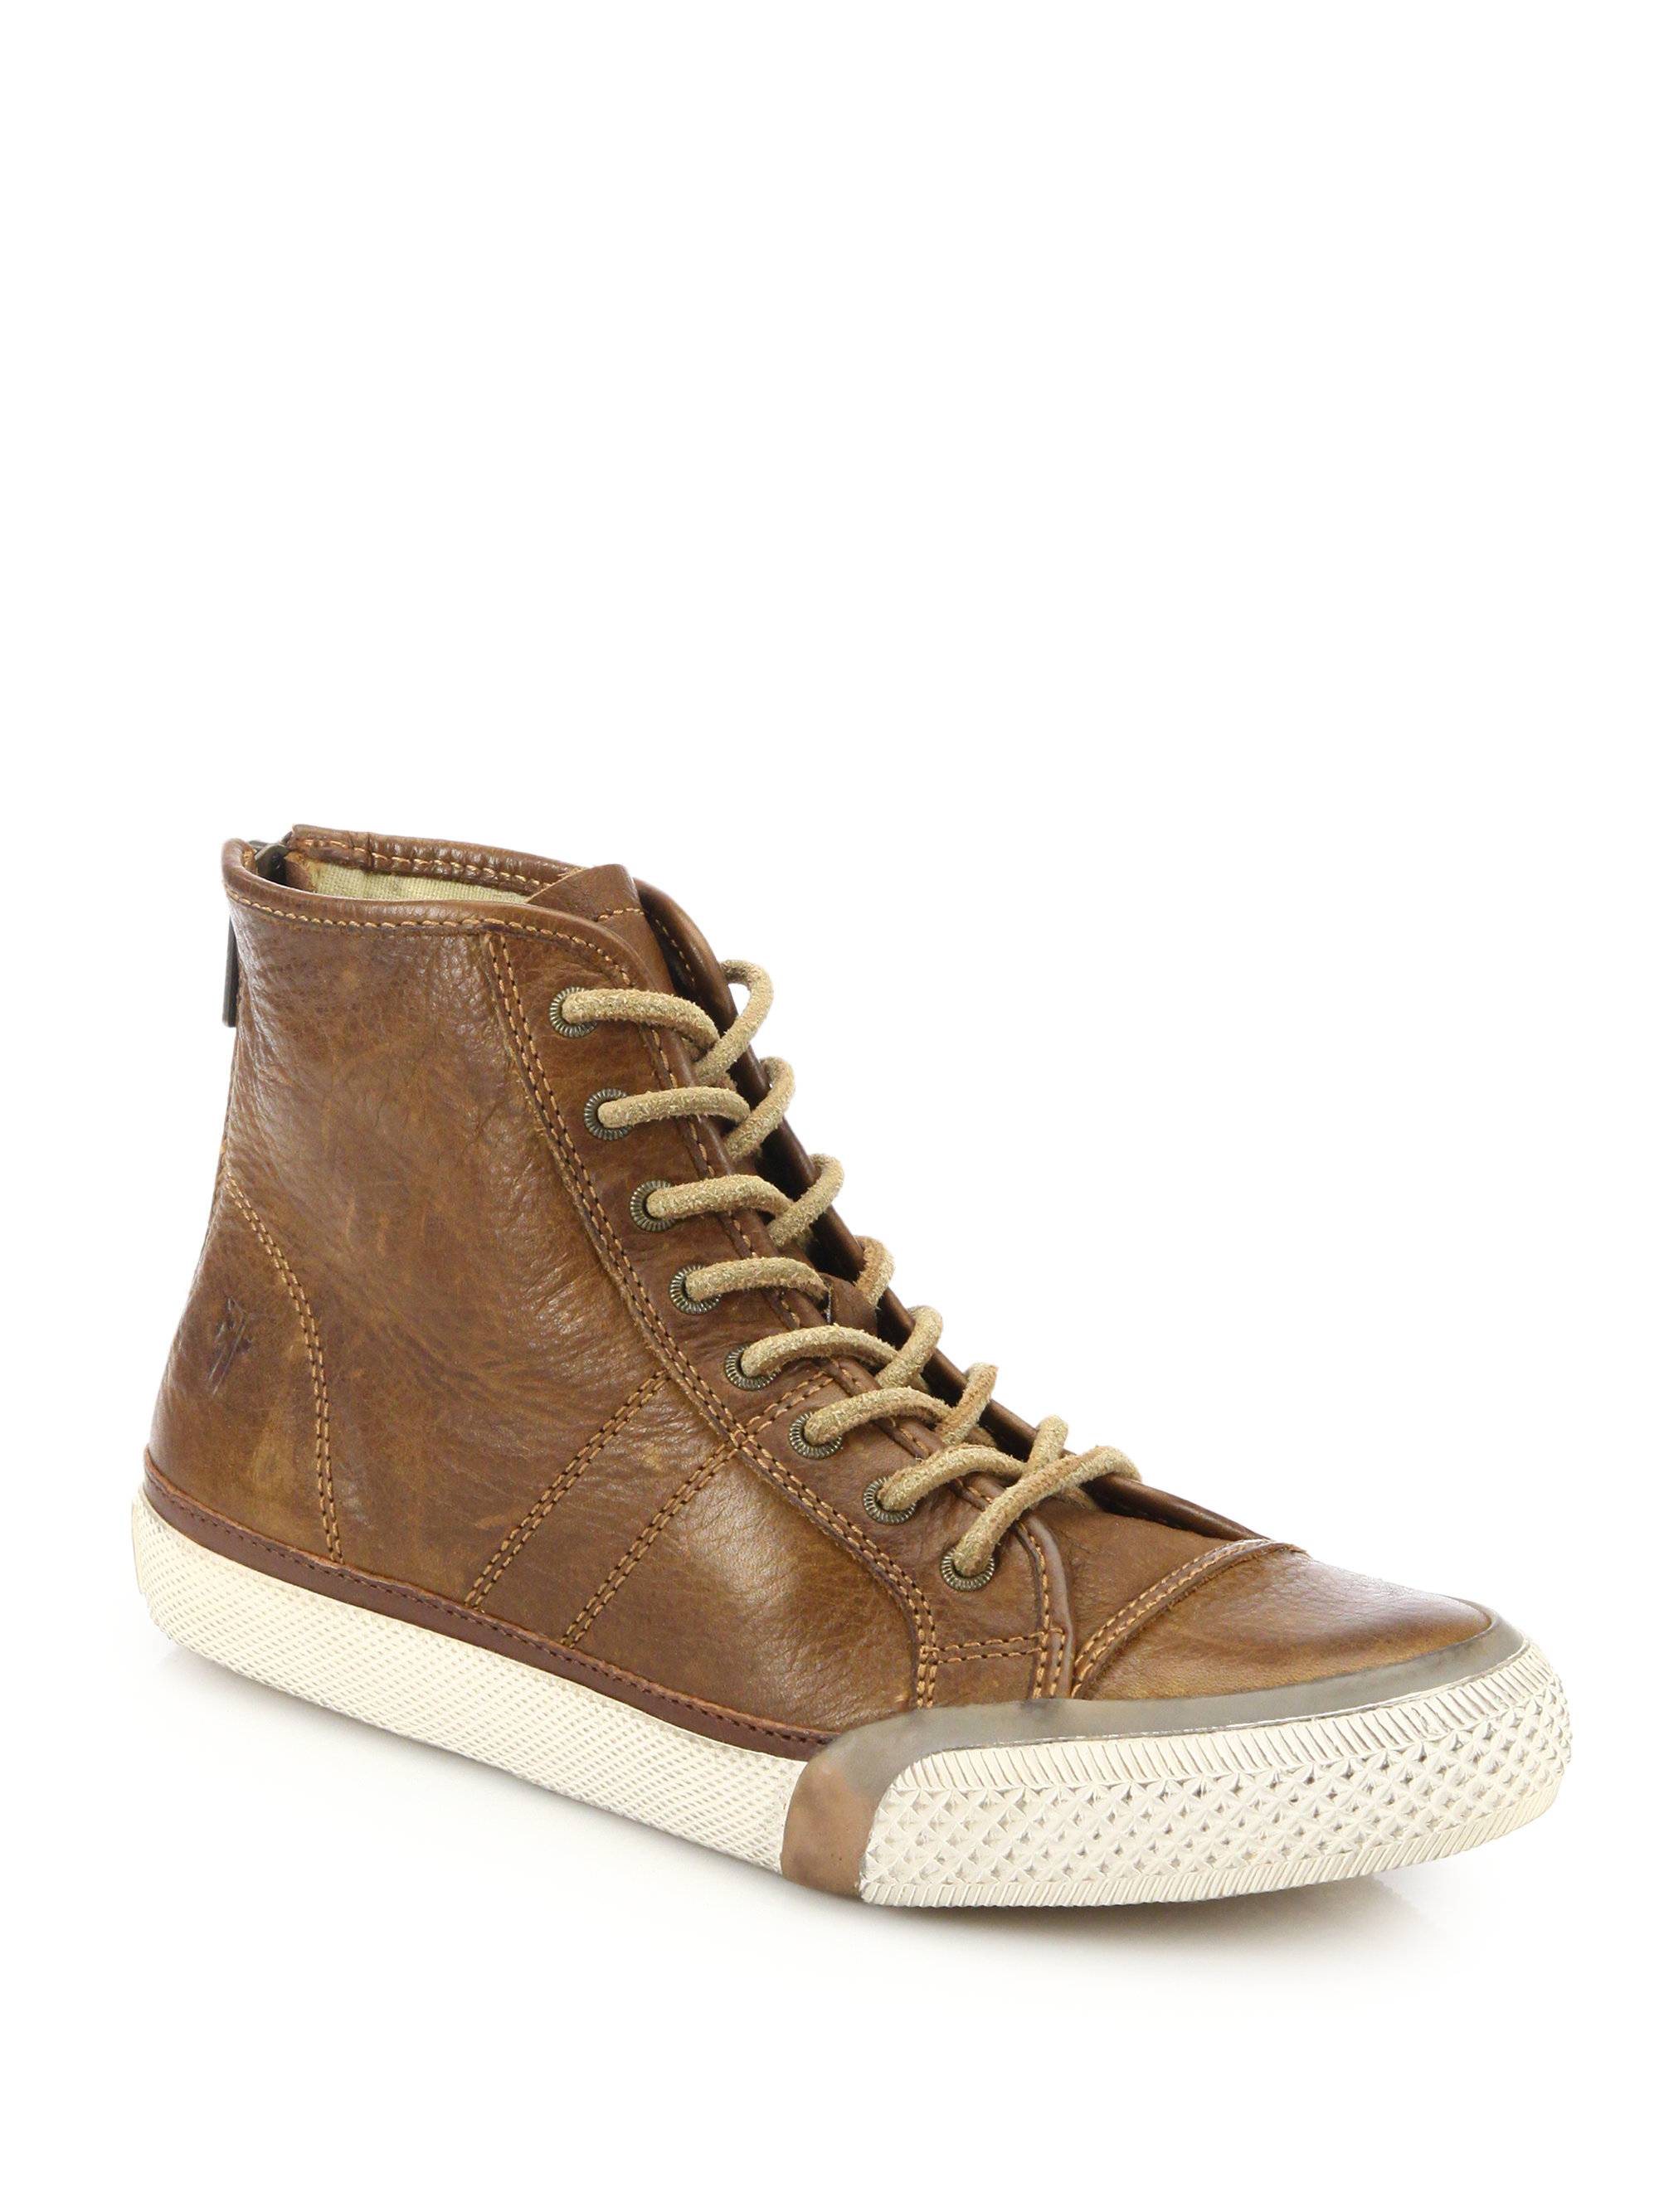 Frye Greene Leather Back-Zip High-Top Sneakers in Brown | Lyst2000 x 2667